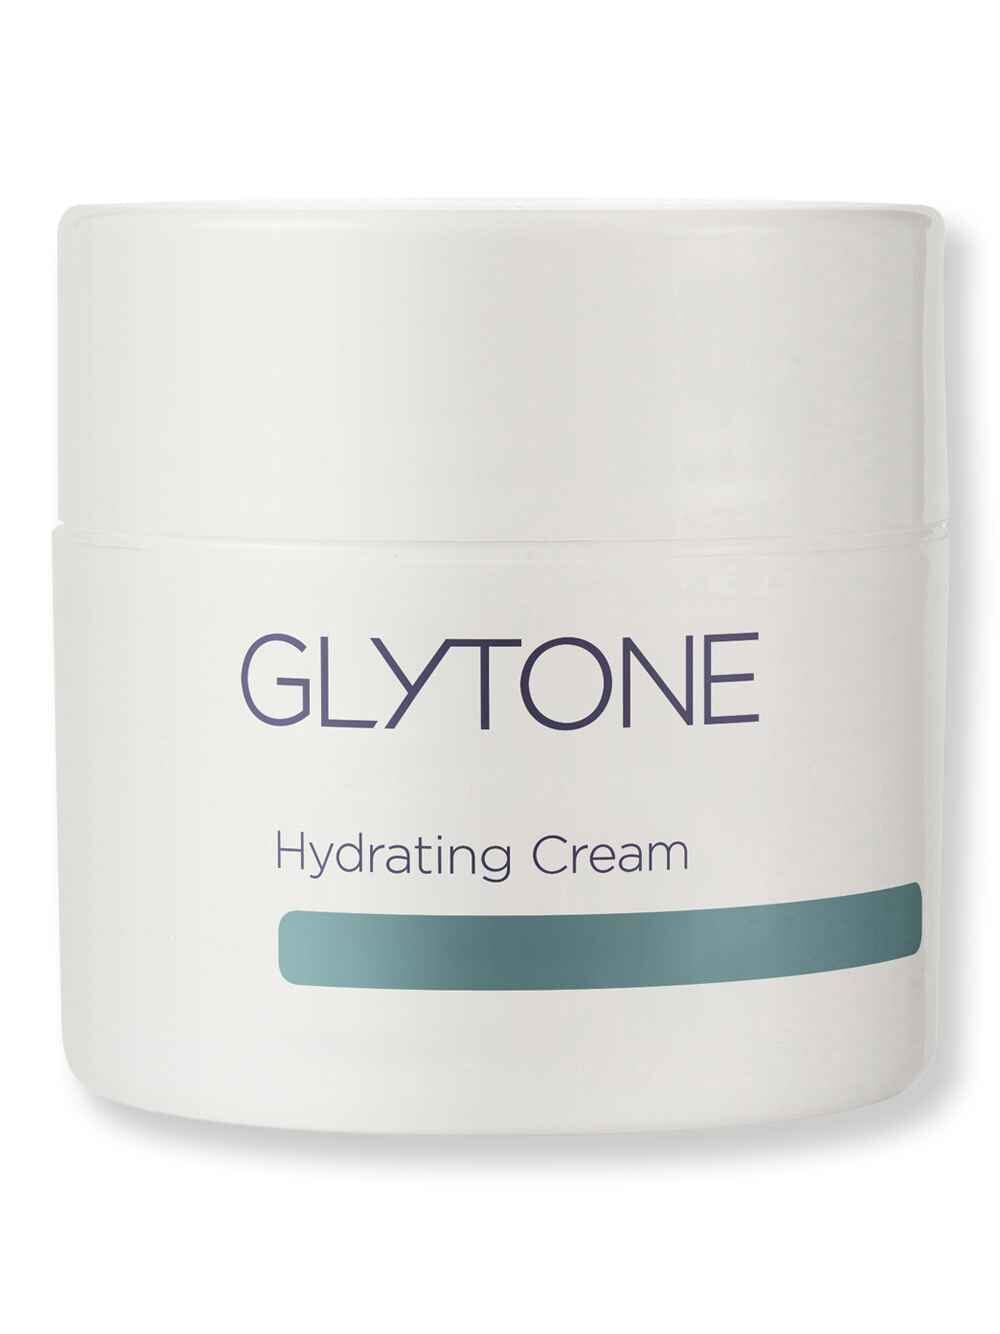 Glytone Glytone Hydrating Cream 1.7 oz50 ml Face Moisturizers 